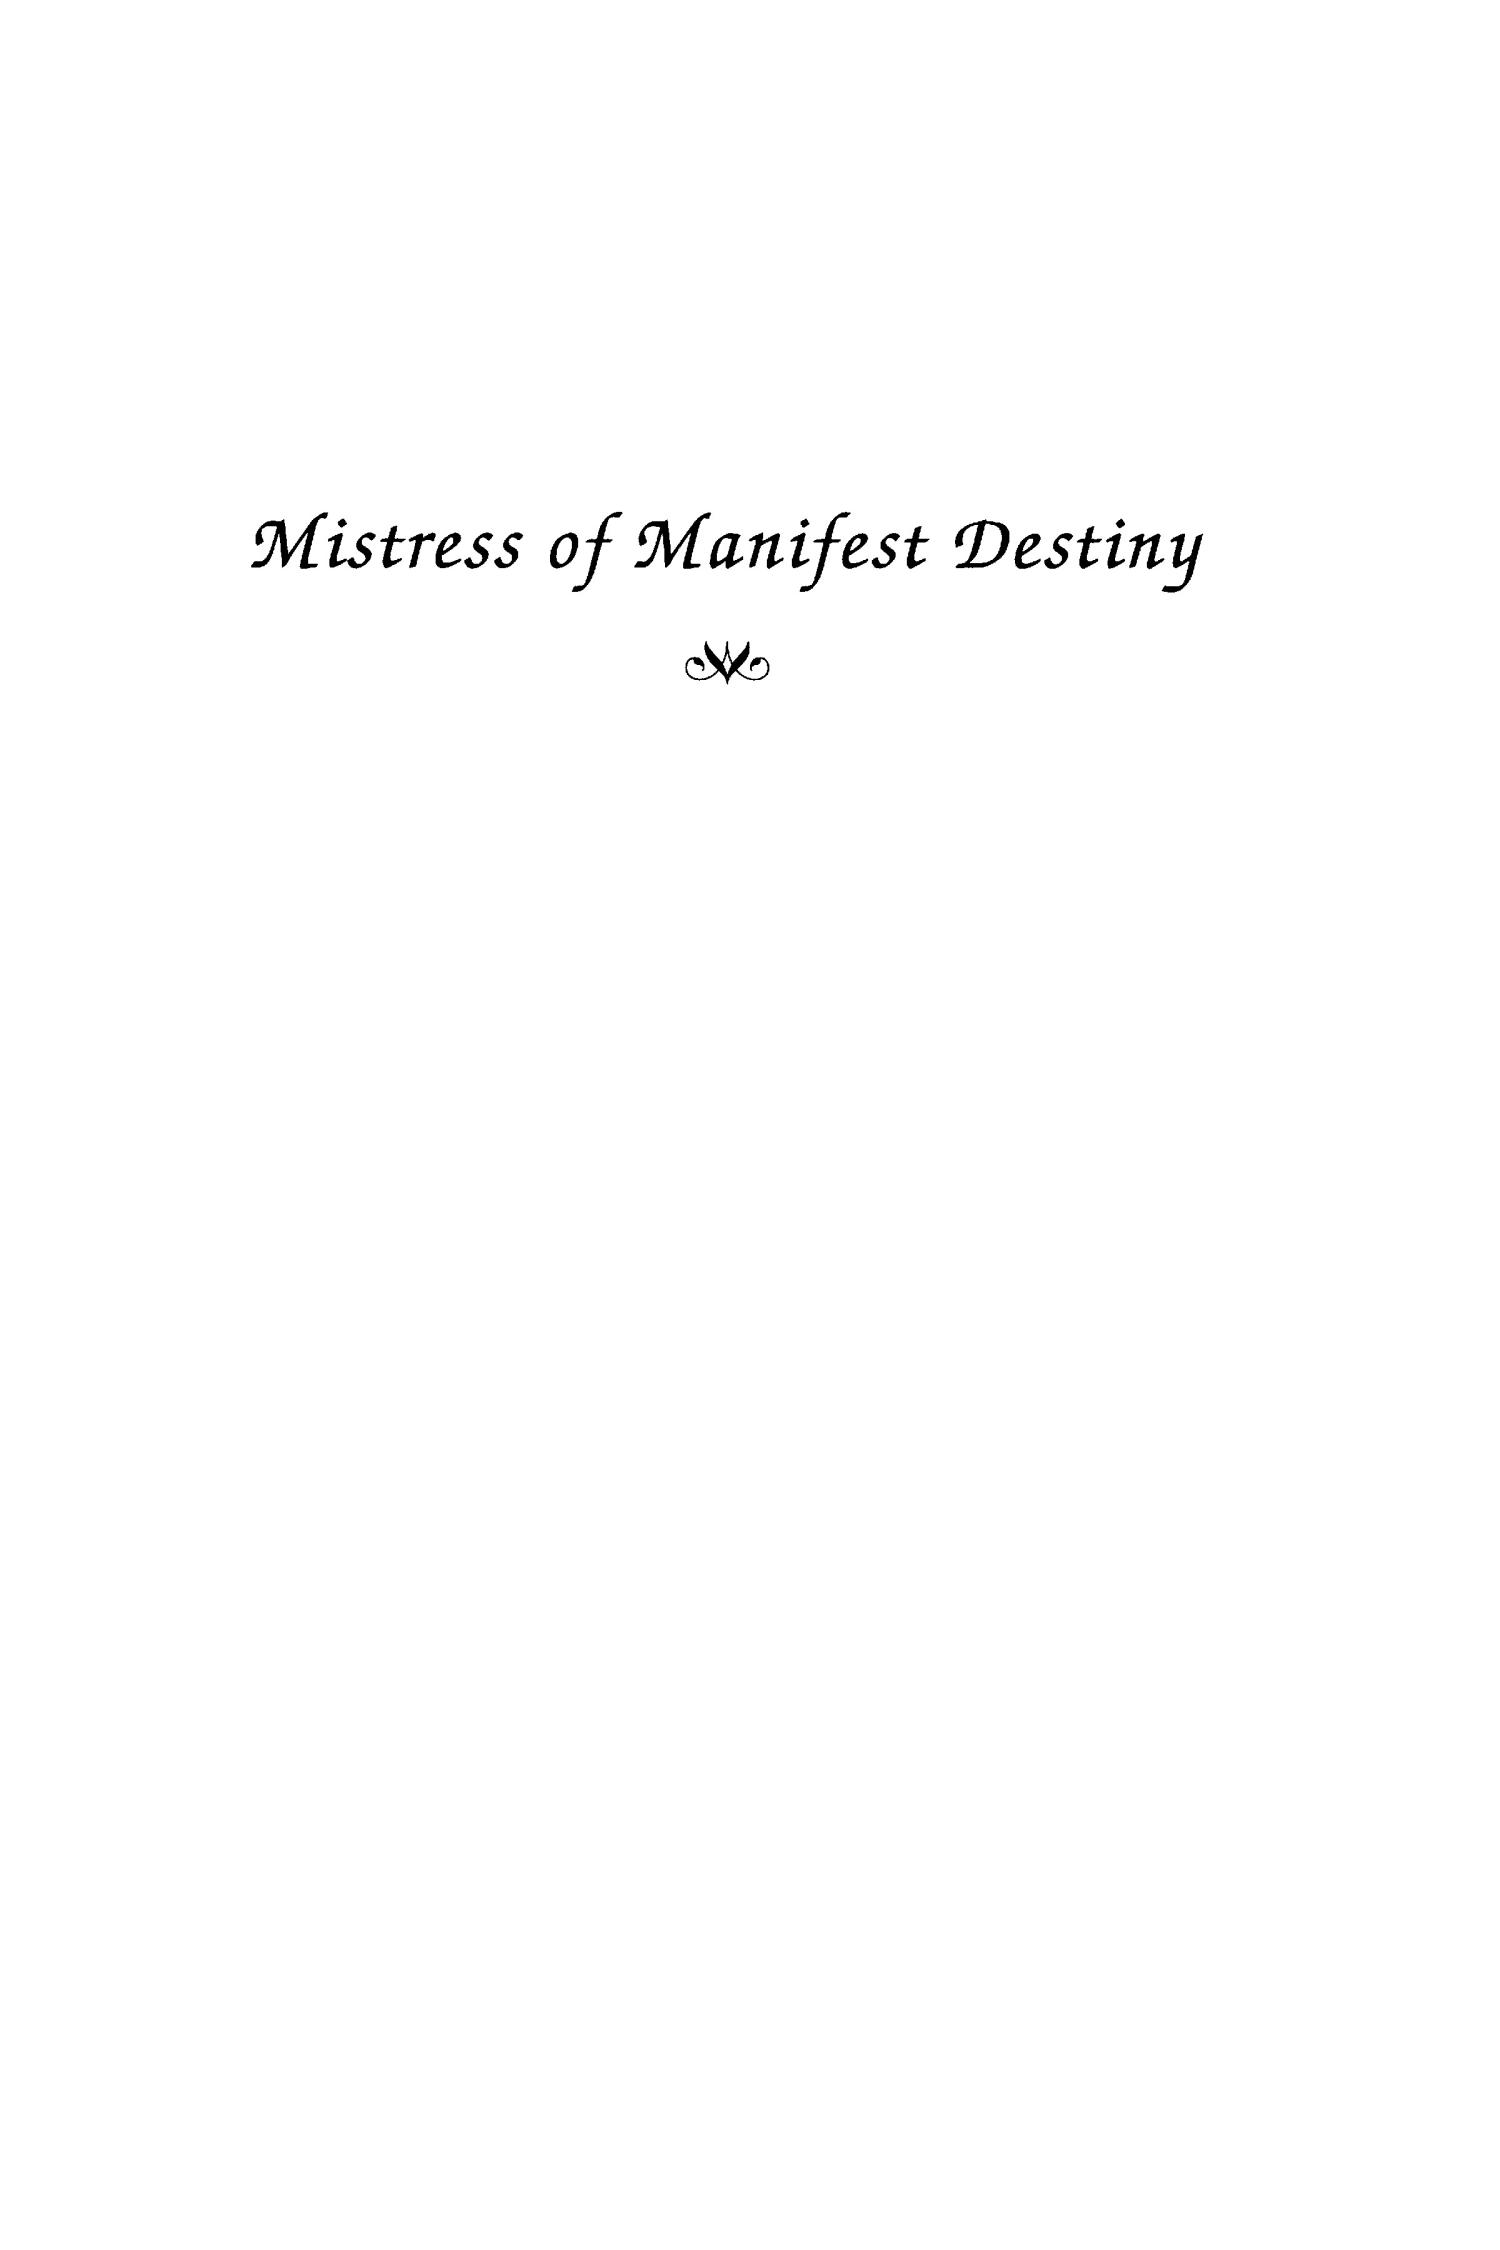 Mistress of Manifest Destiny: A Biography of Jane McManus Storm Cazneau, 1807-1878
                                                
                                                    I
                                                